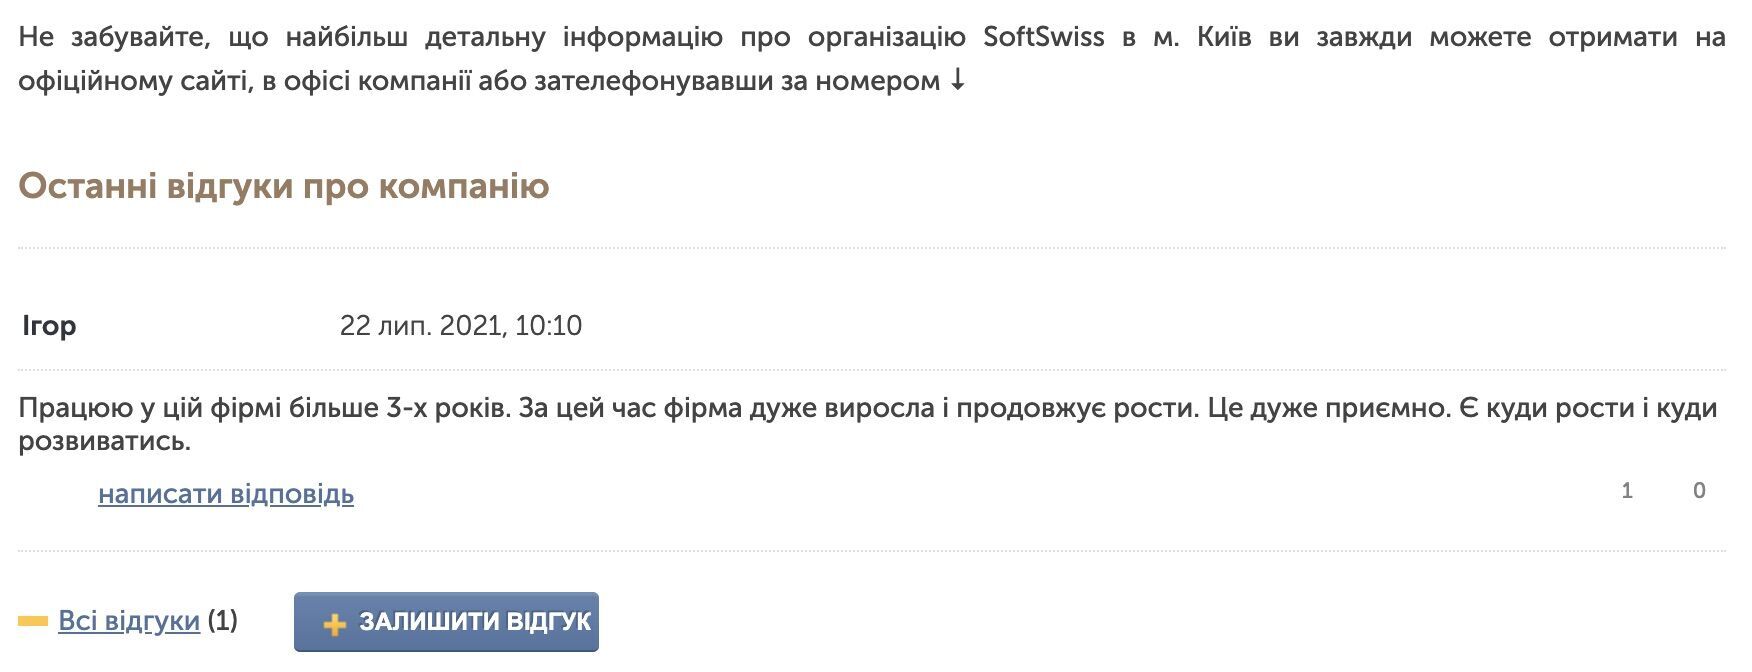 Отзыв украинского сотрудника компании SoftSwiss